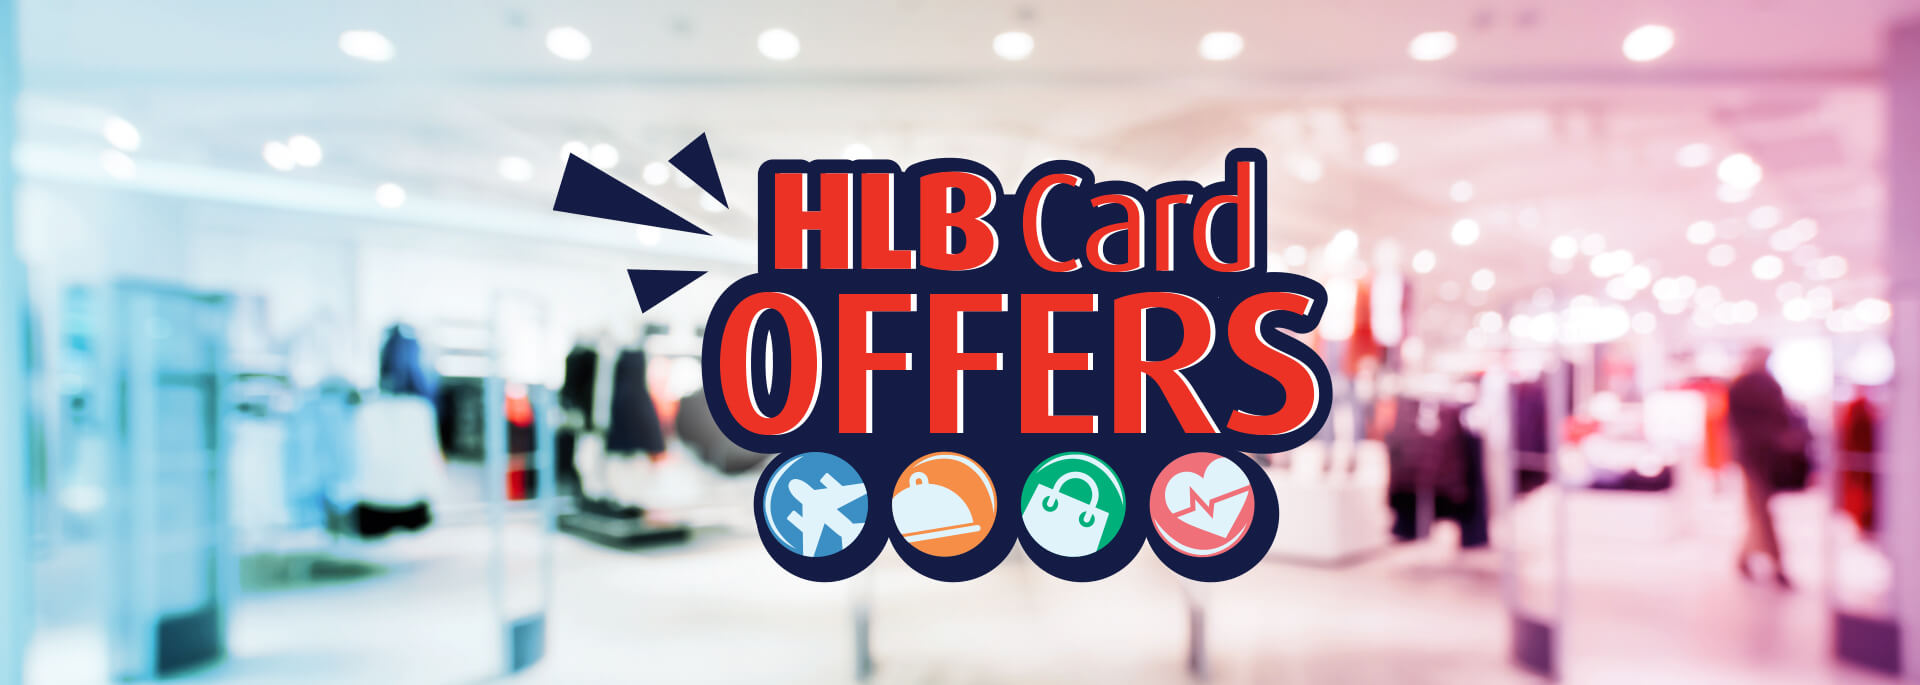 HLB Card Offers